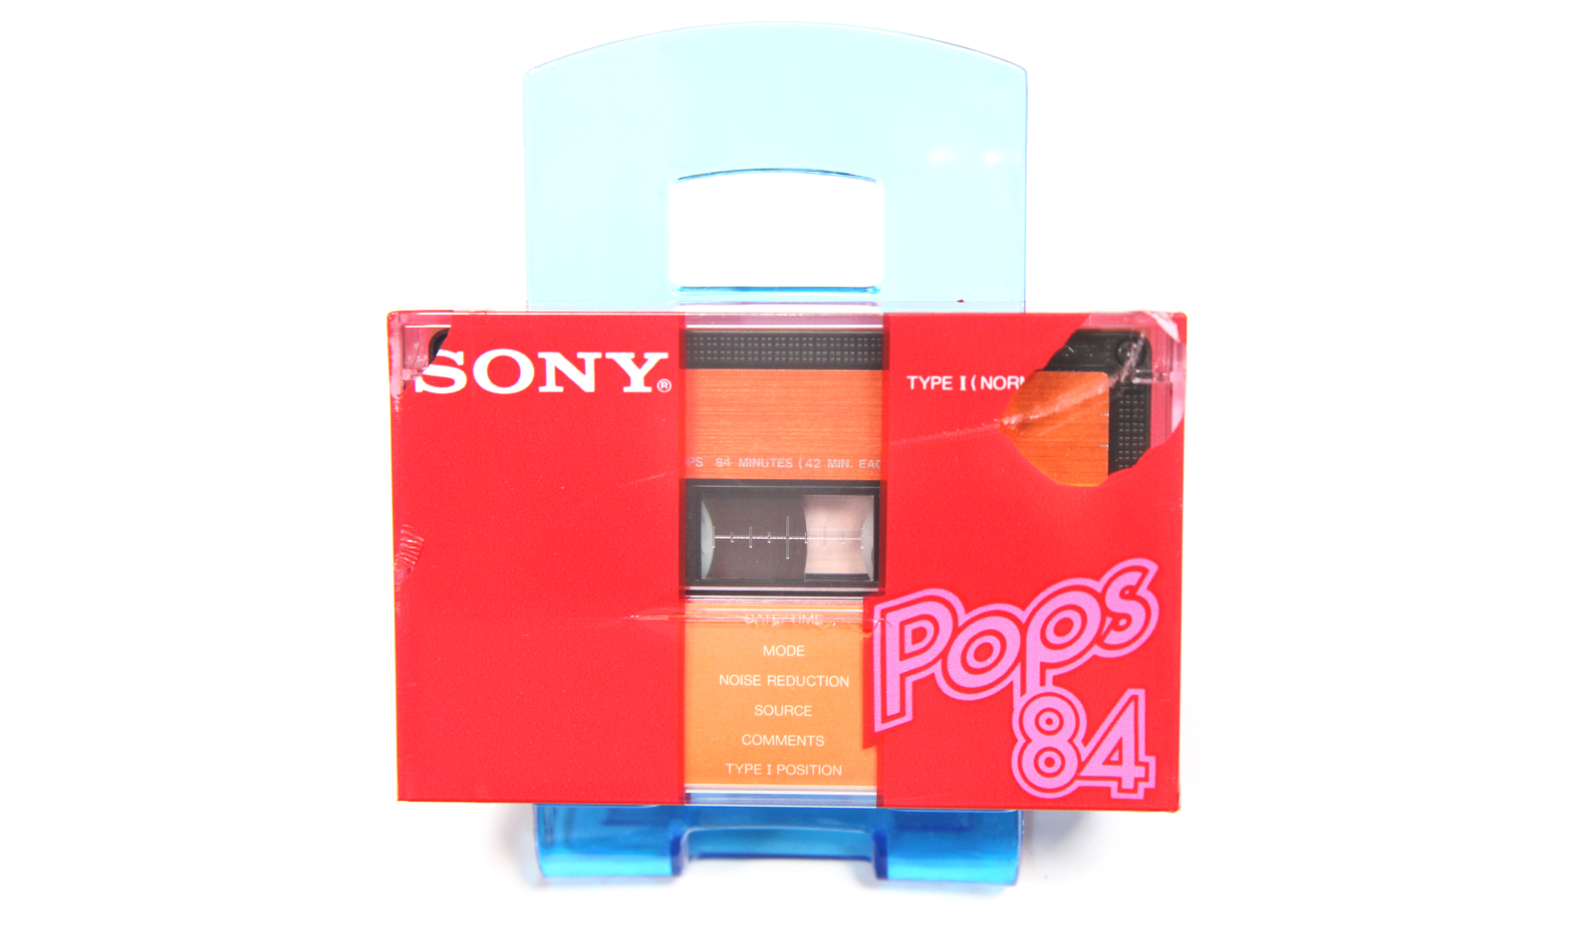 SONY POPS-84 Japan